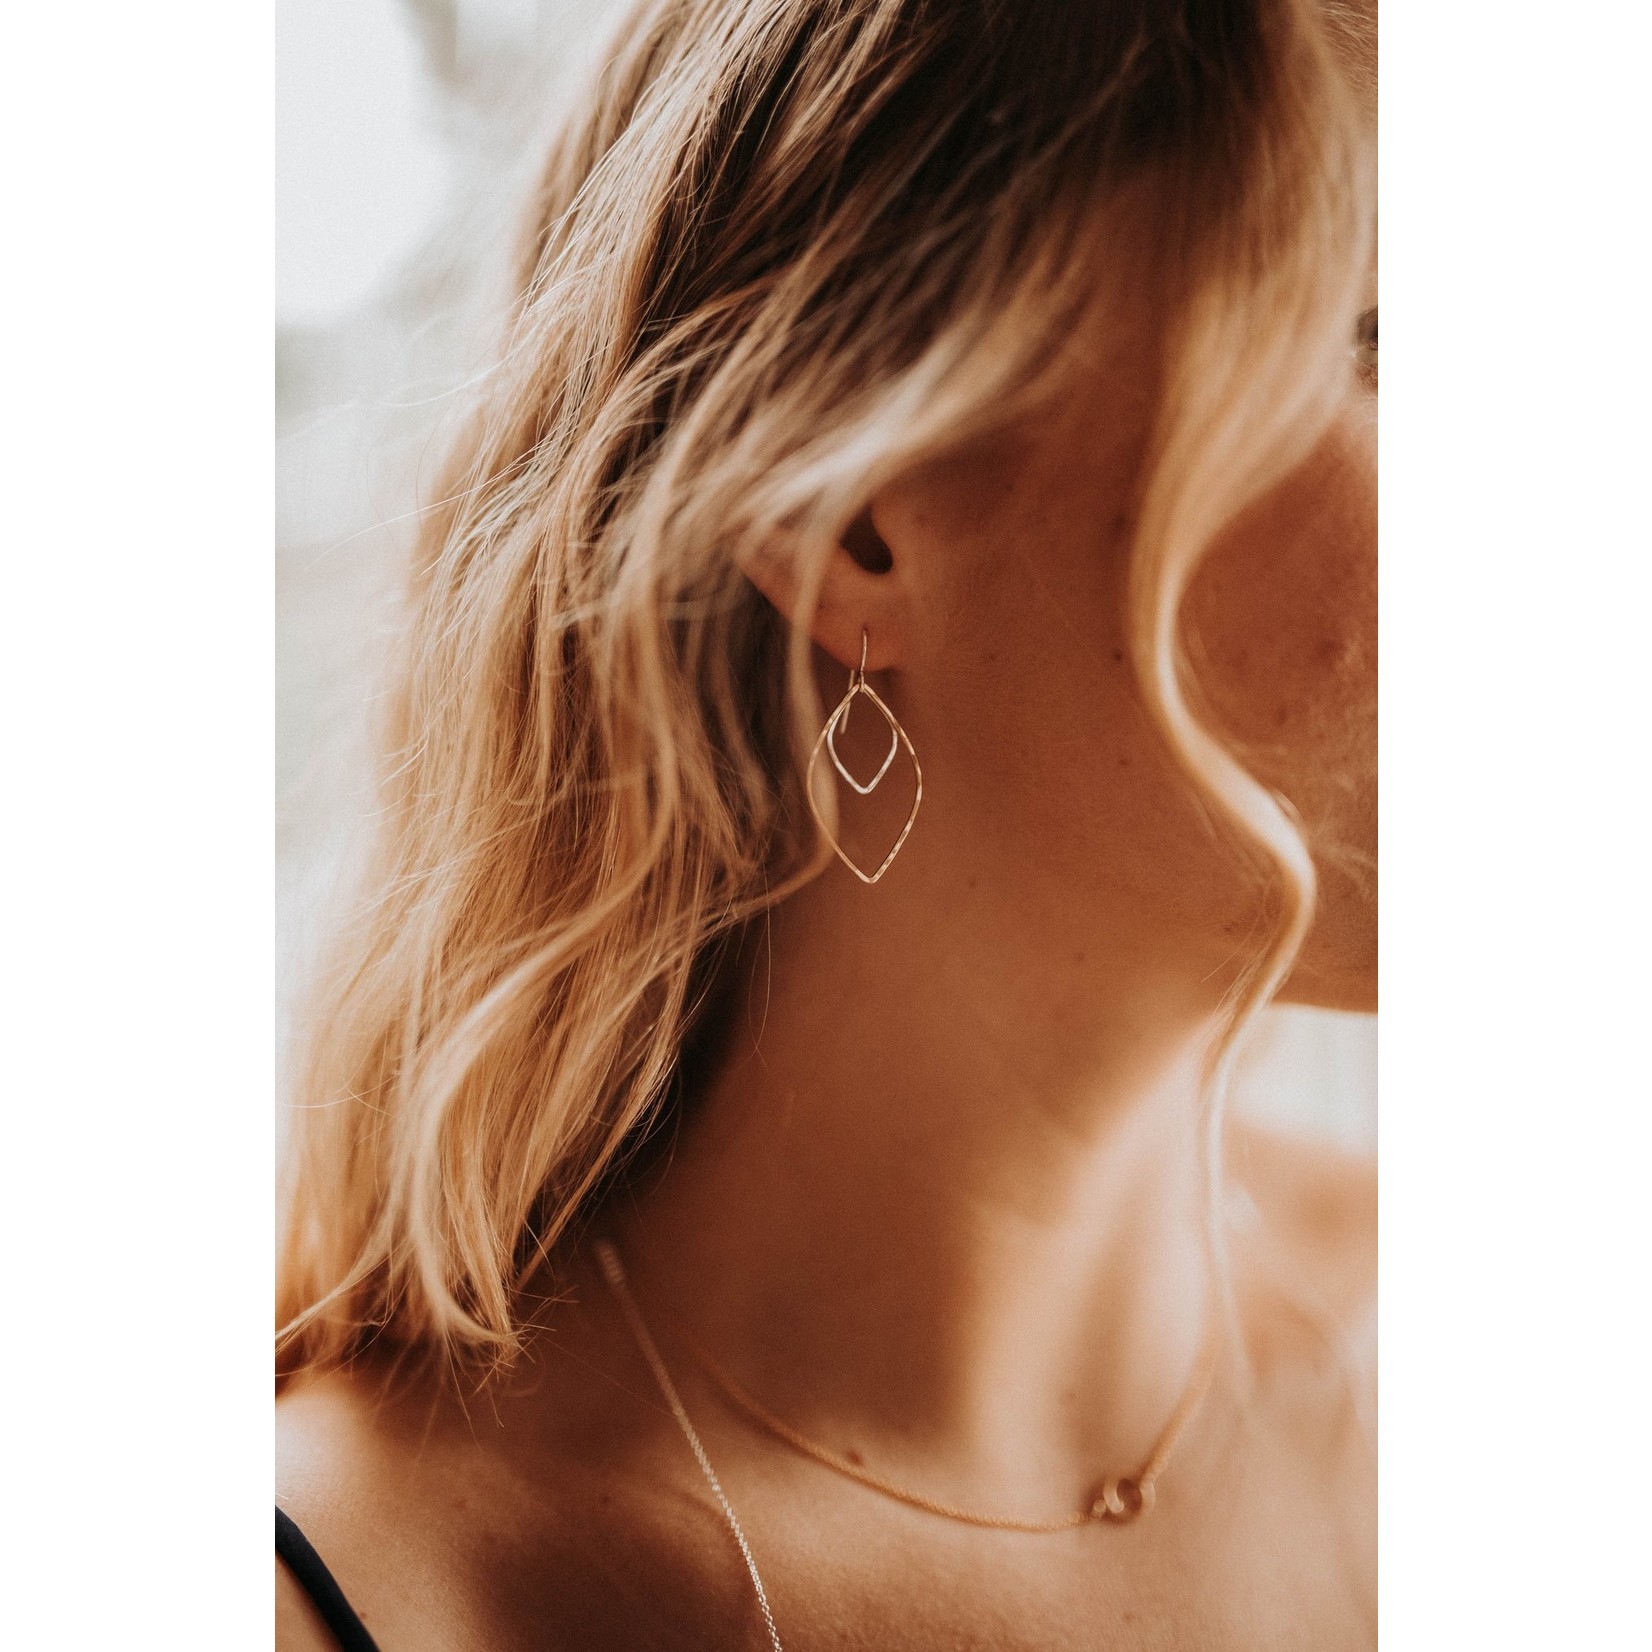 Tamacino "Laurel" - double shape two tone earrings